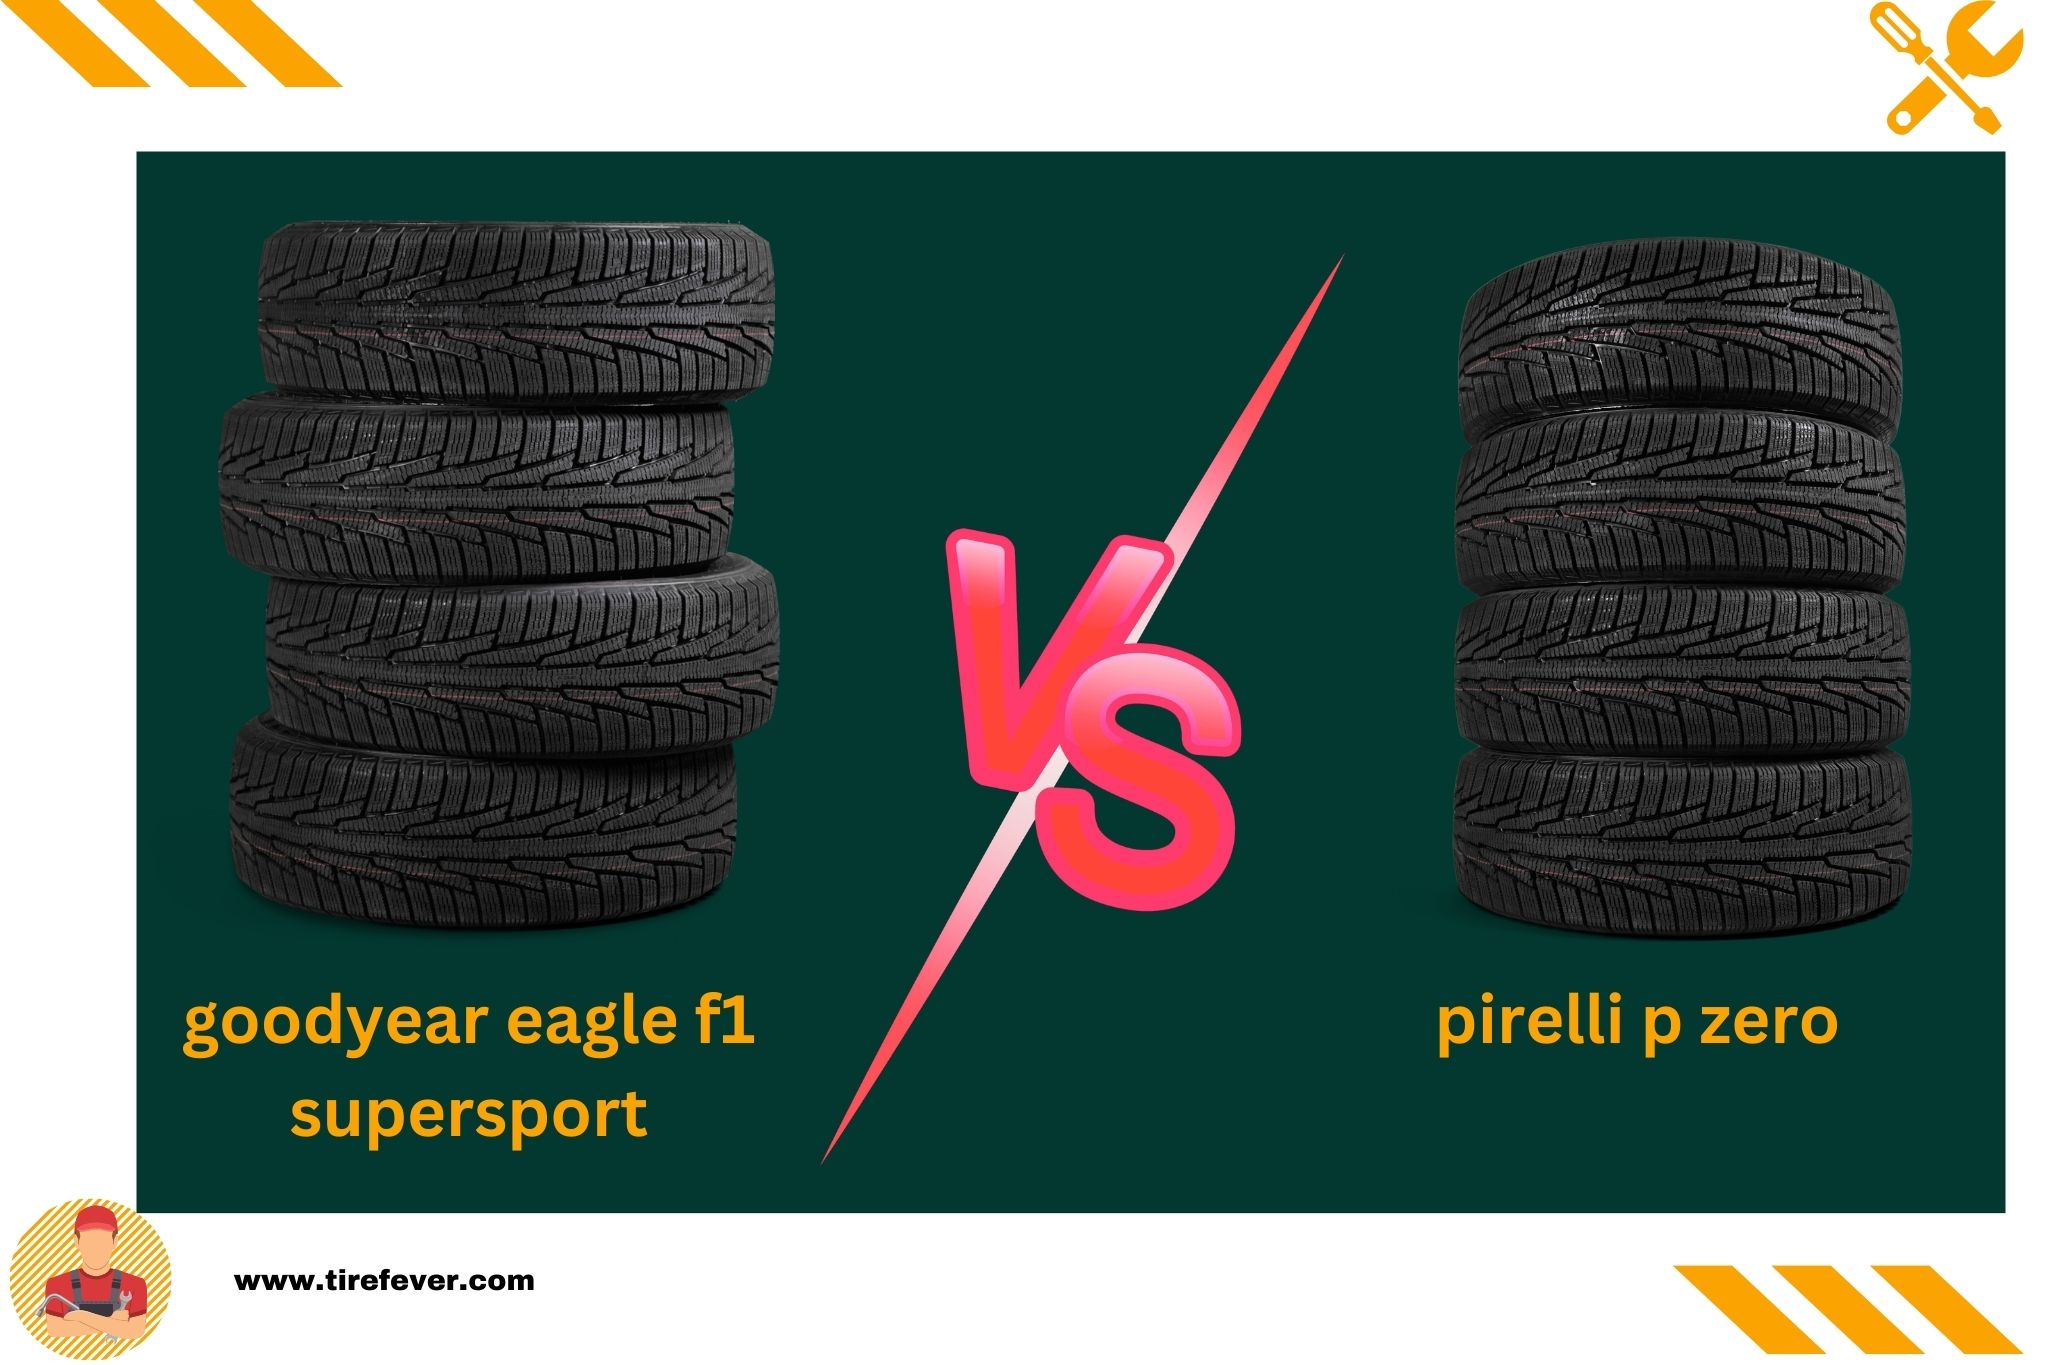 goodyear eagle f1 supersport vs pirelli p zero